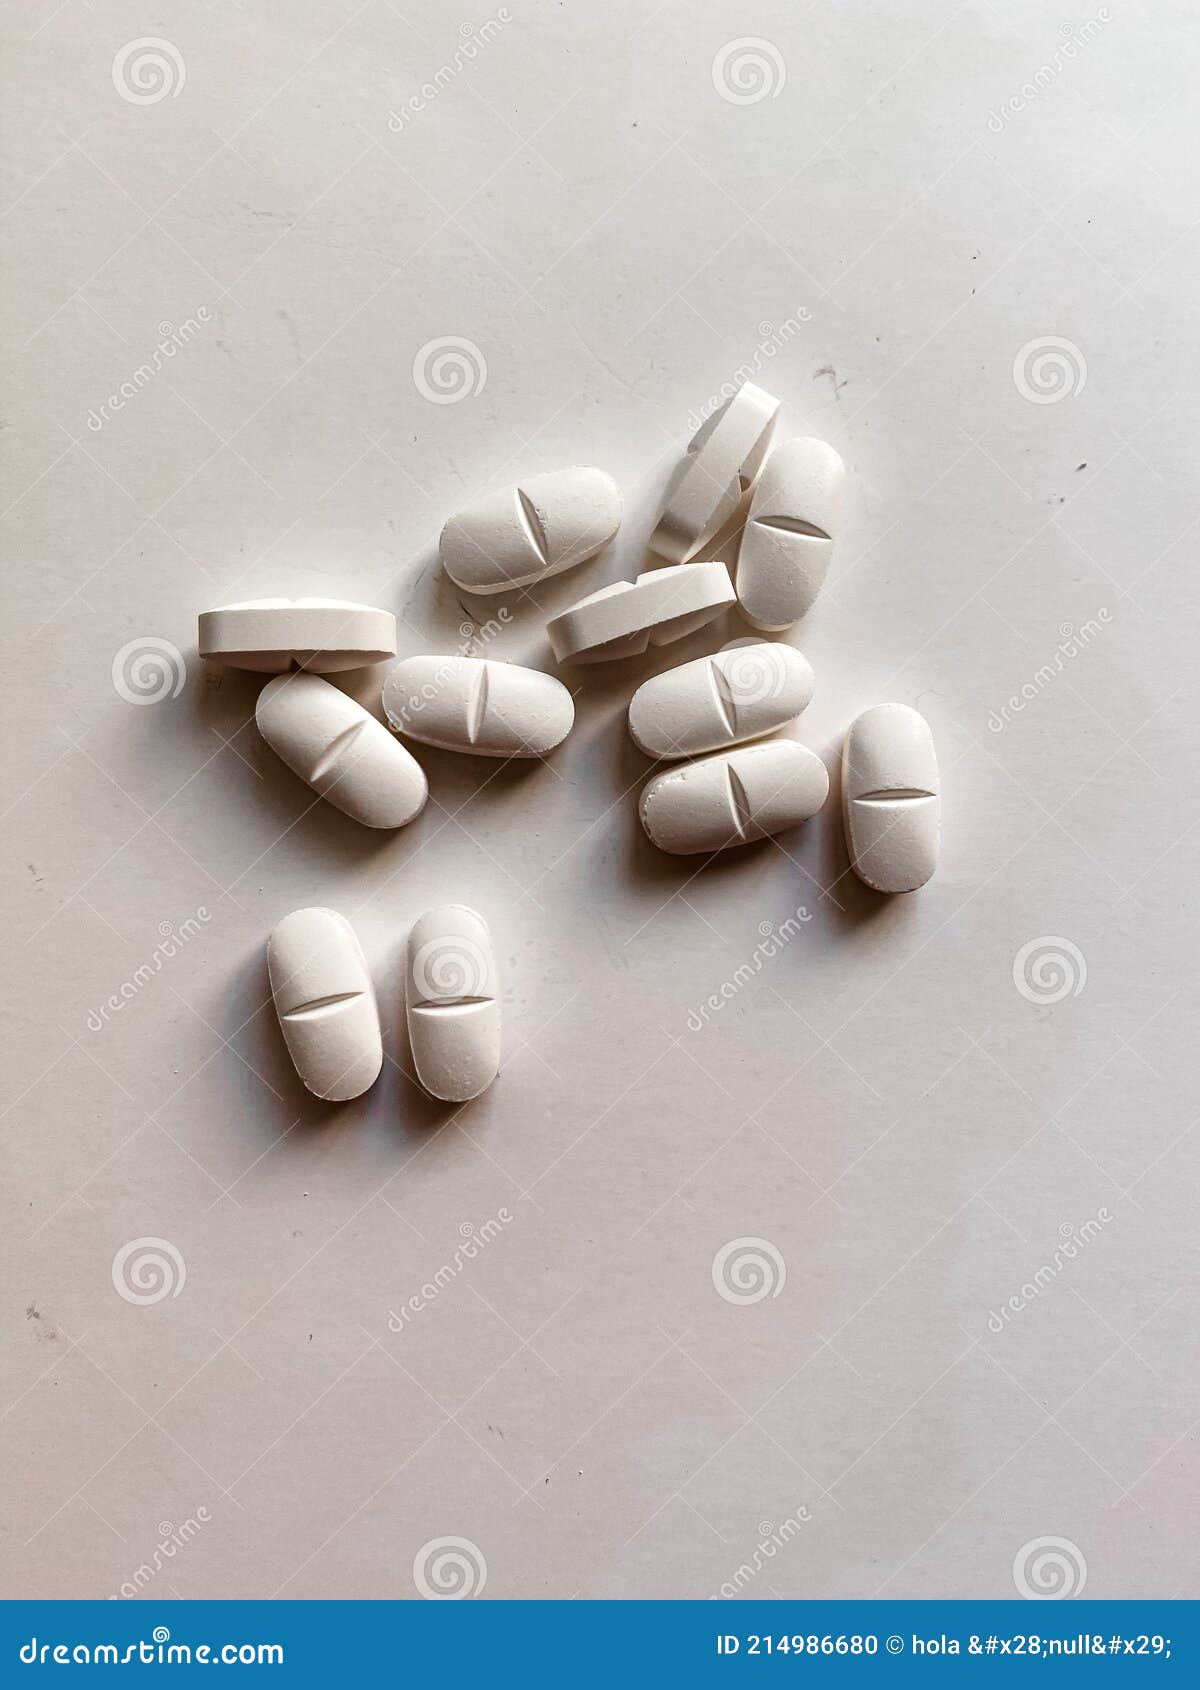 white tablets pastillas blancas